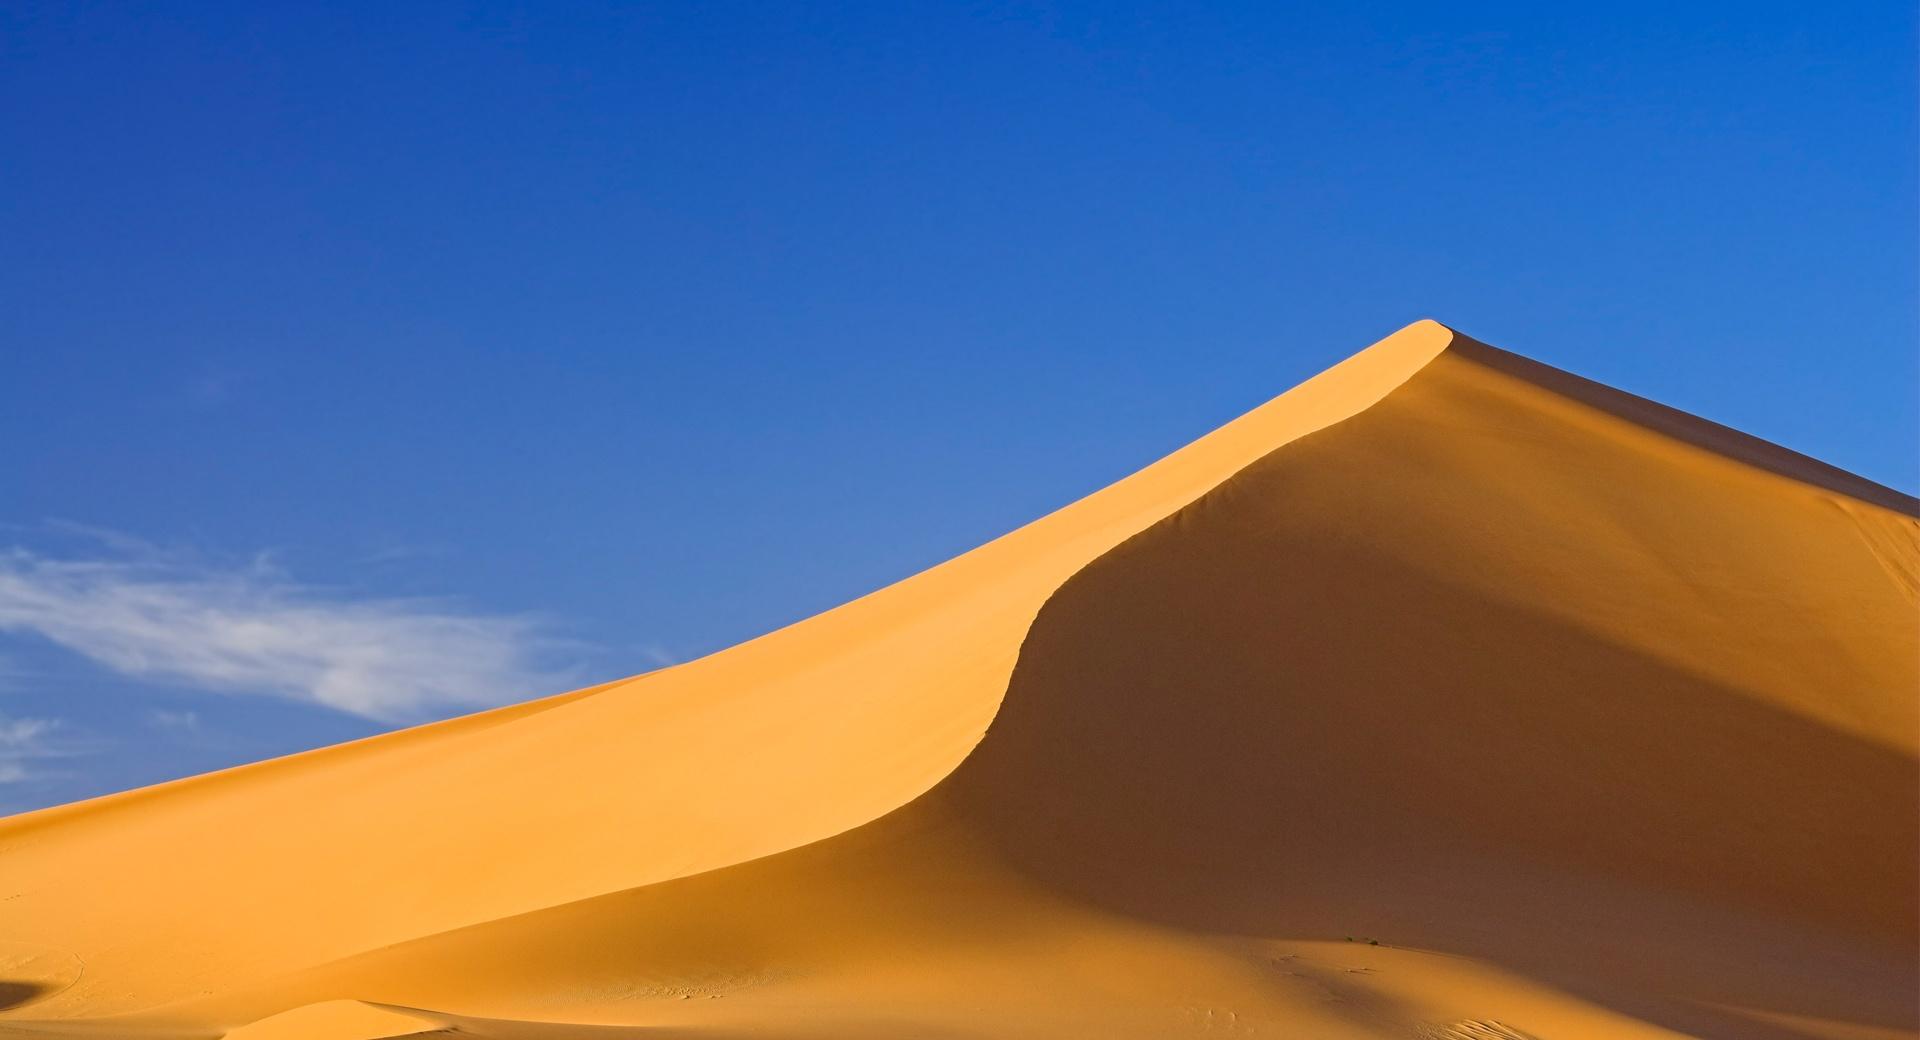 Sand Dunes Jabal Akakus Libya at 1024 x 1024 iPad size wallpapers HD quality